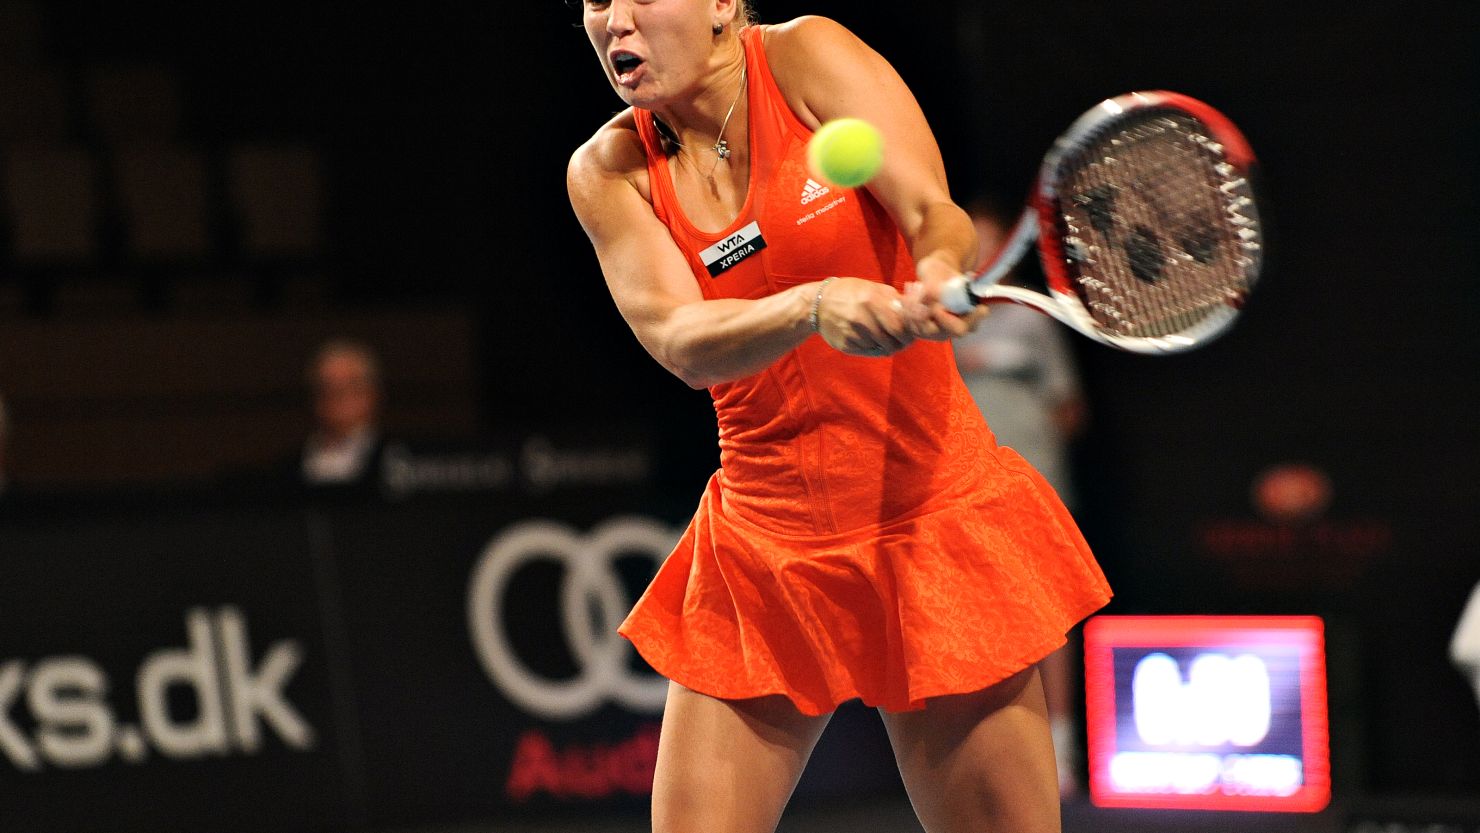 Caroline Wozniacki plays a powerful ground stroke during her straight sets win in Copenhagen.